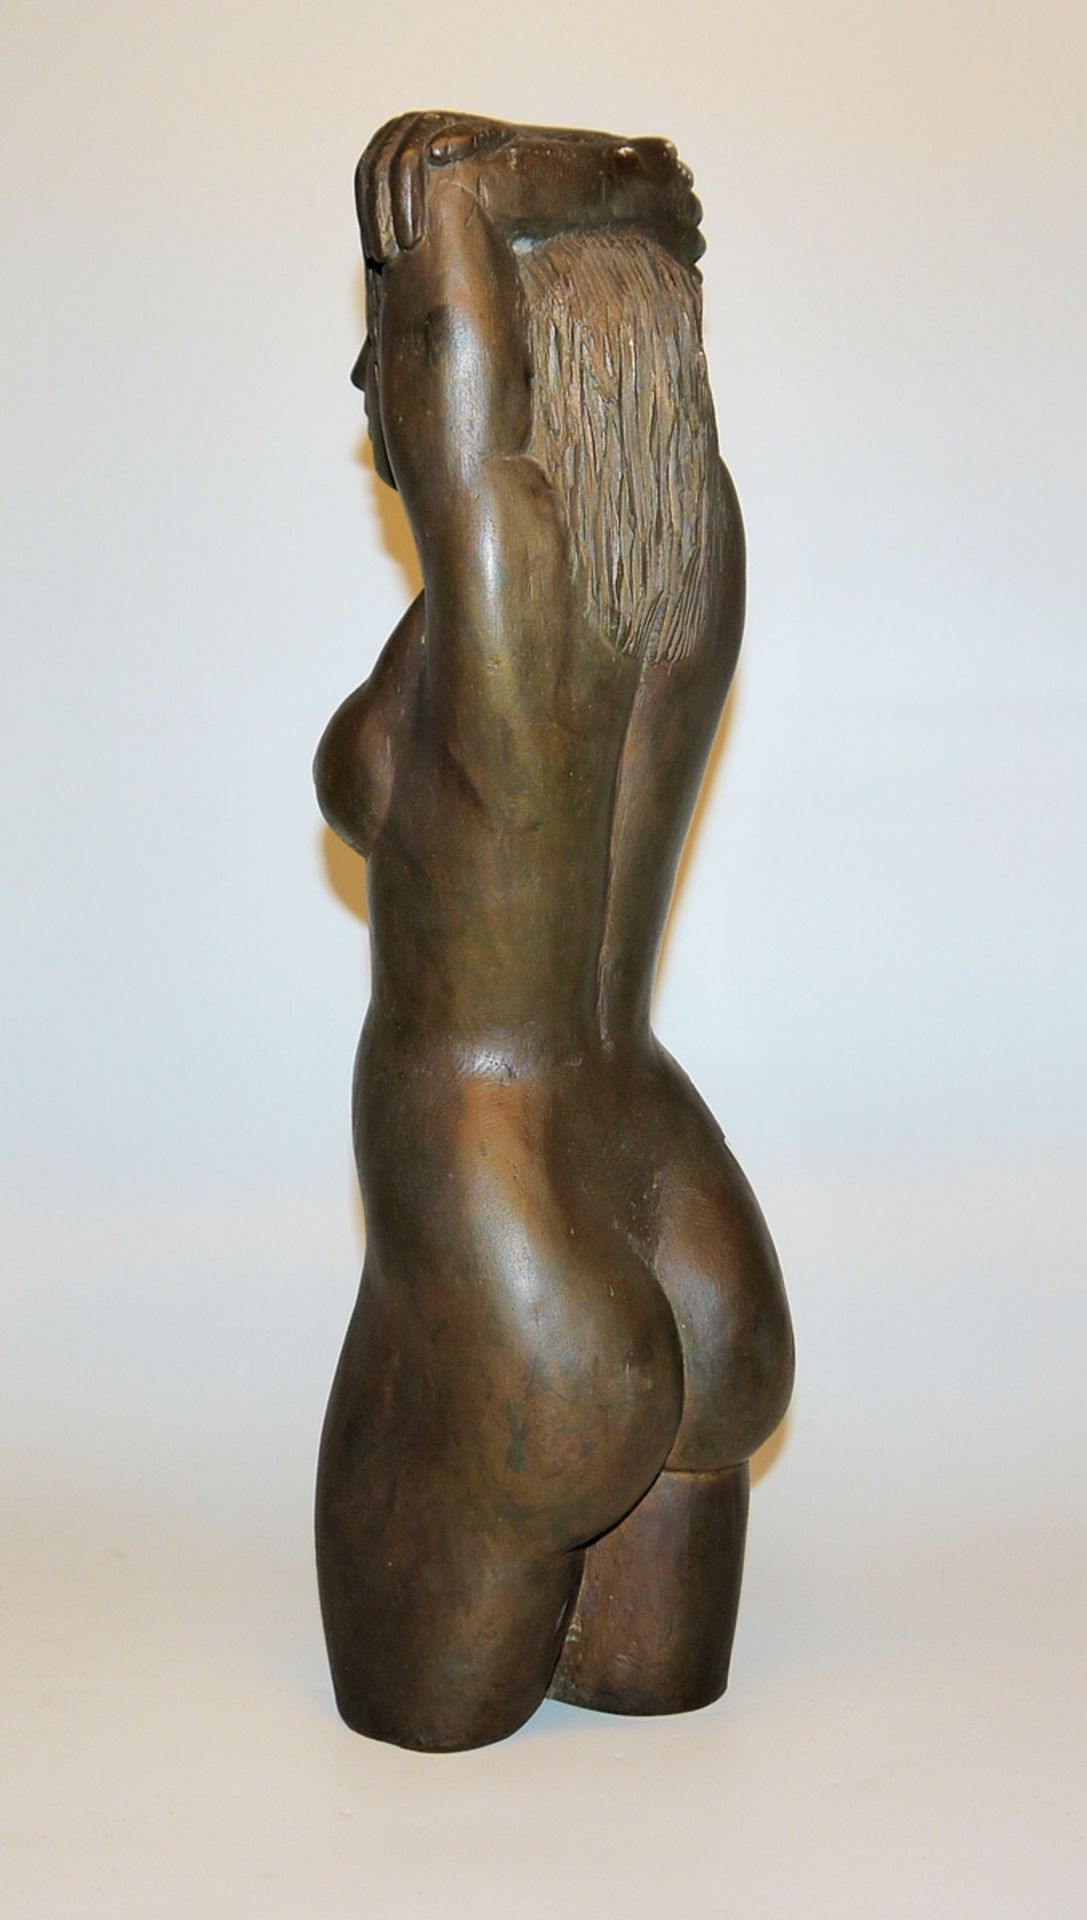 Uwe Wenk-Wolff, "Mädchentorso", bronze sculpture from 1975, with catalogue raisonné, no. 72074 - Image 2 of 3